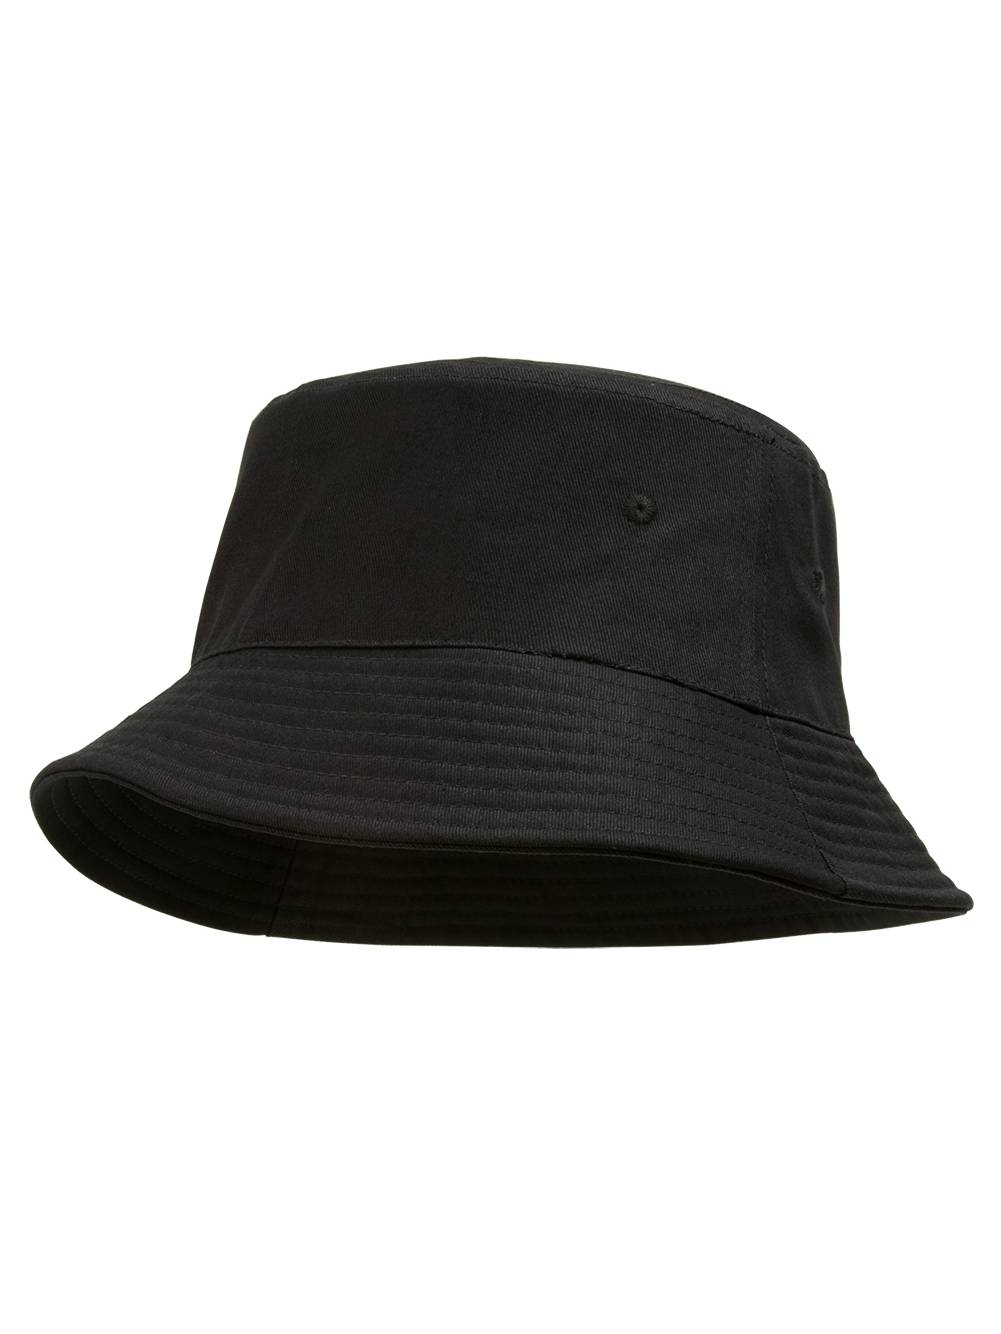 Bucket Hat For Men Women - Cotton Packable Fishing Cap, Black S/M - image 1 of 3